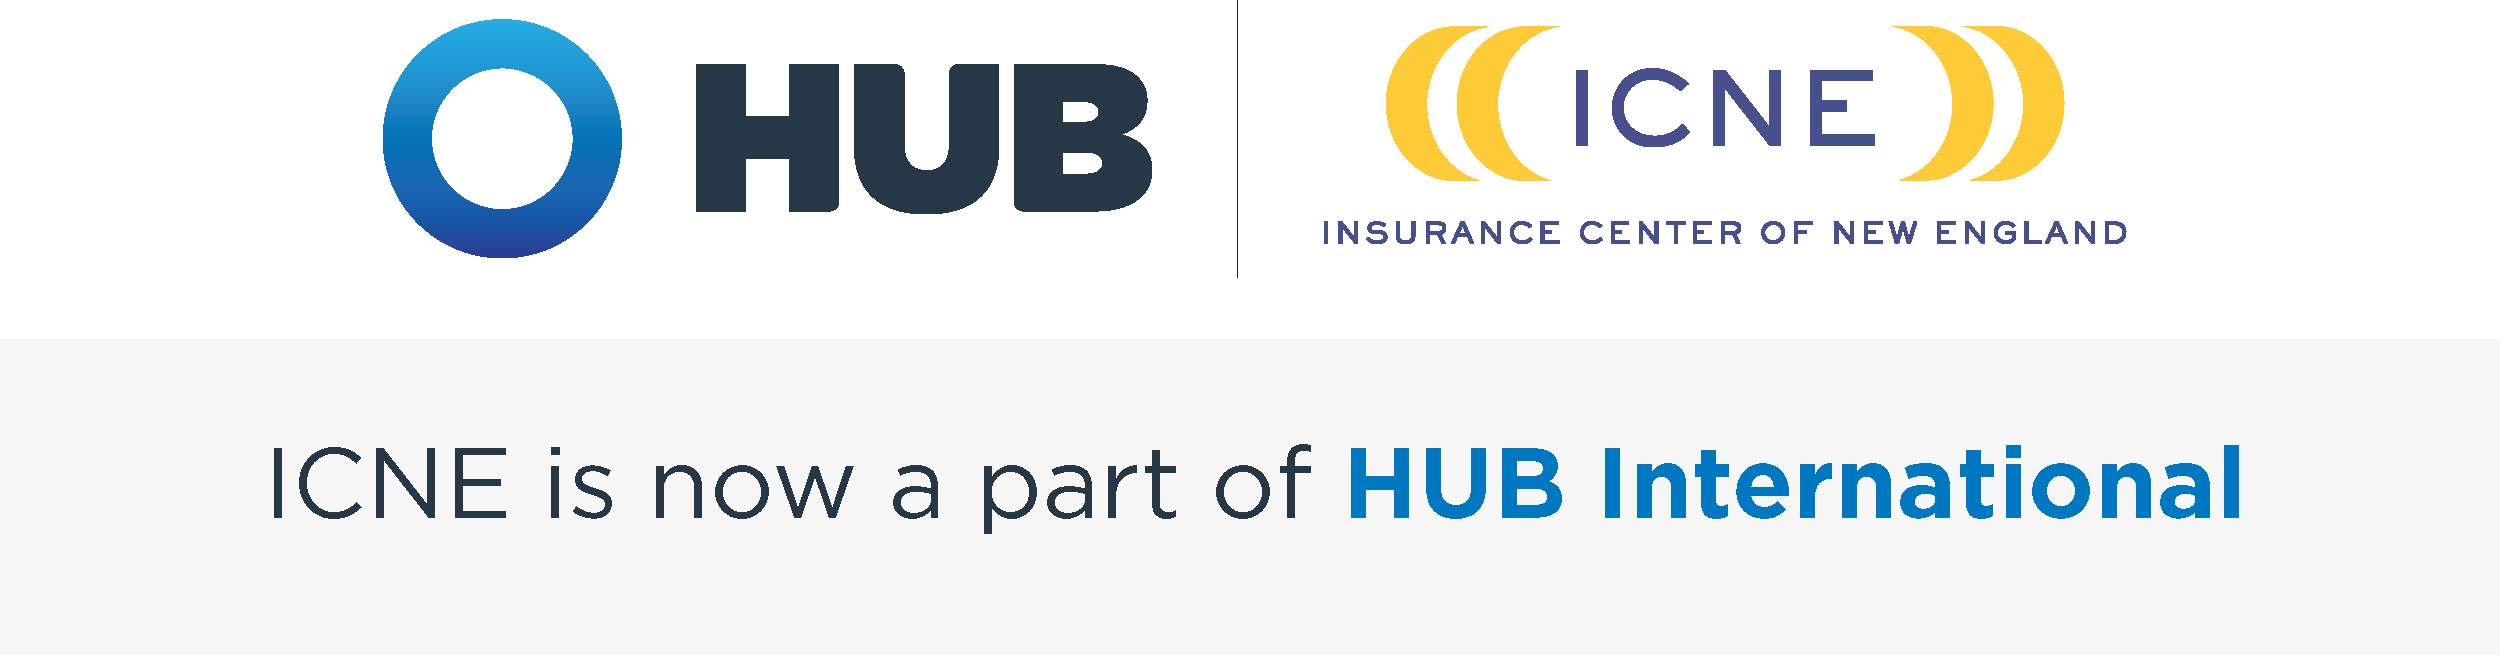 Hub International New England